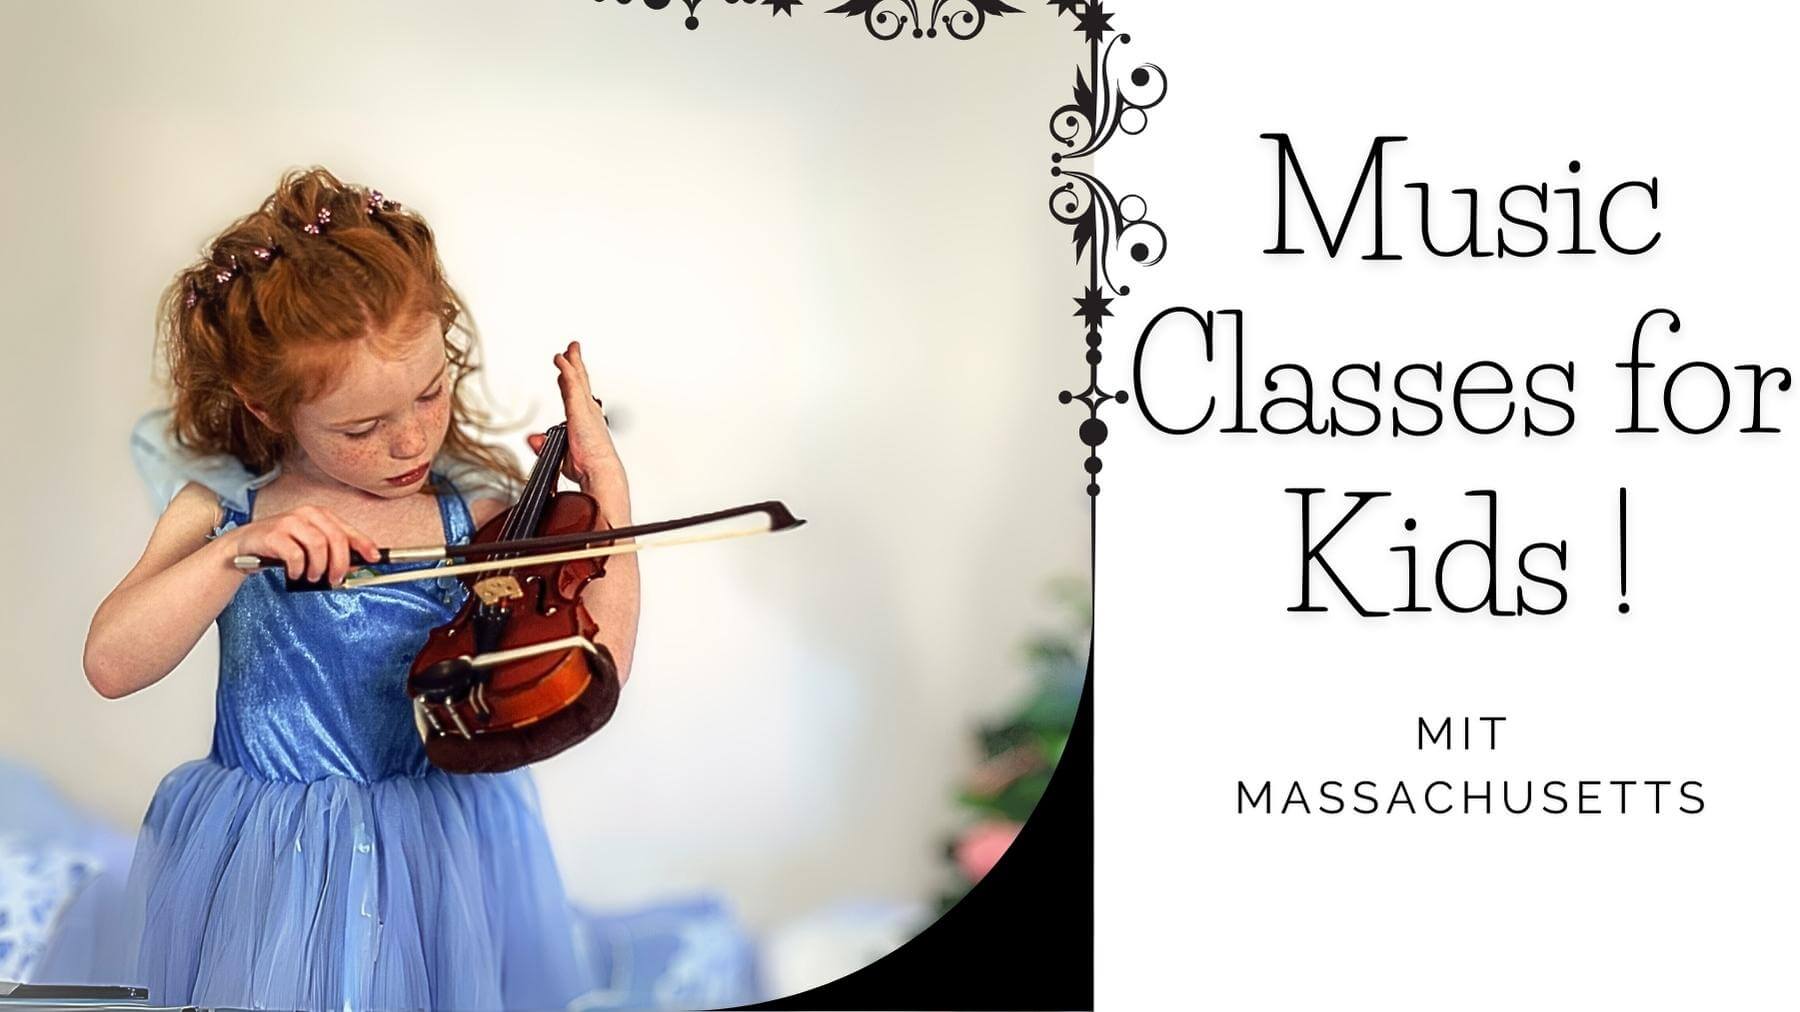 Music Classes for Kids in MIT, Massachusetts